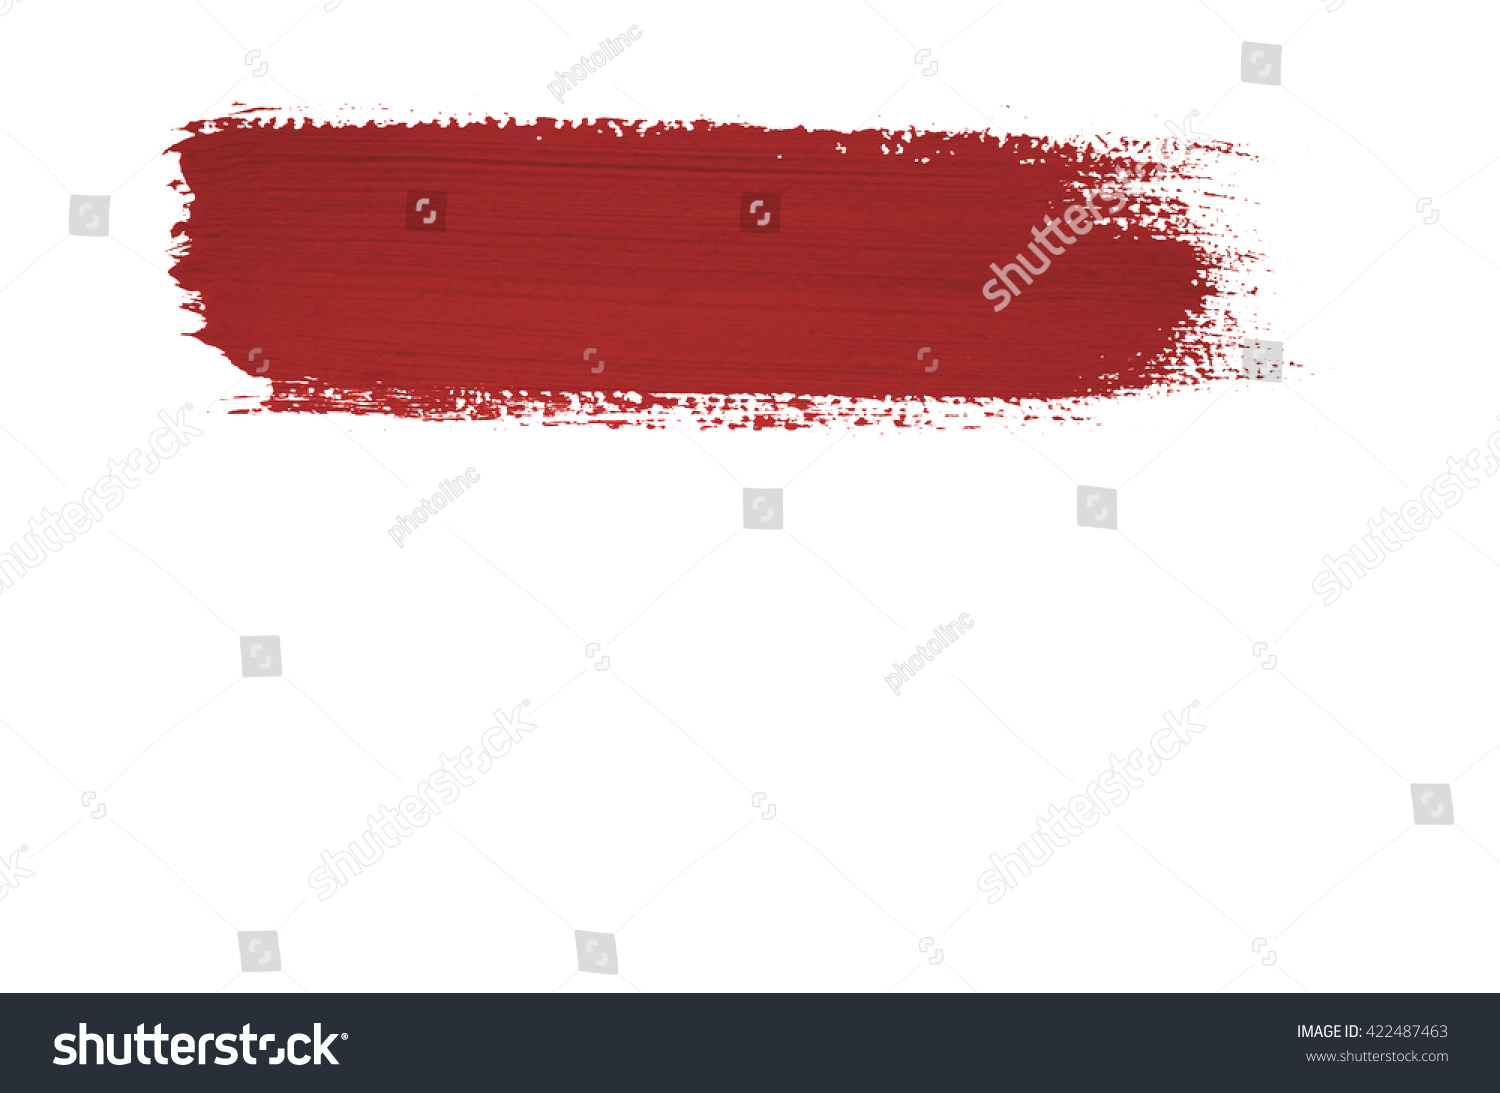 Red brush stroke isolated on white background #422487463